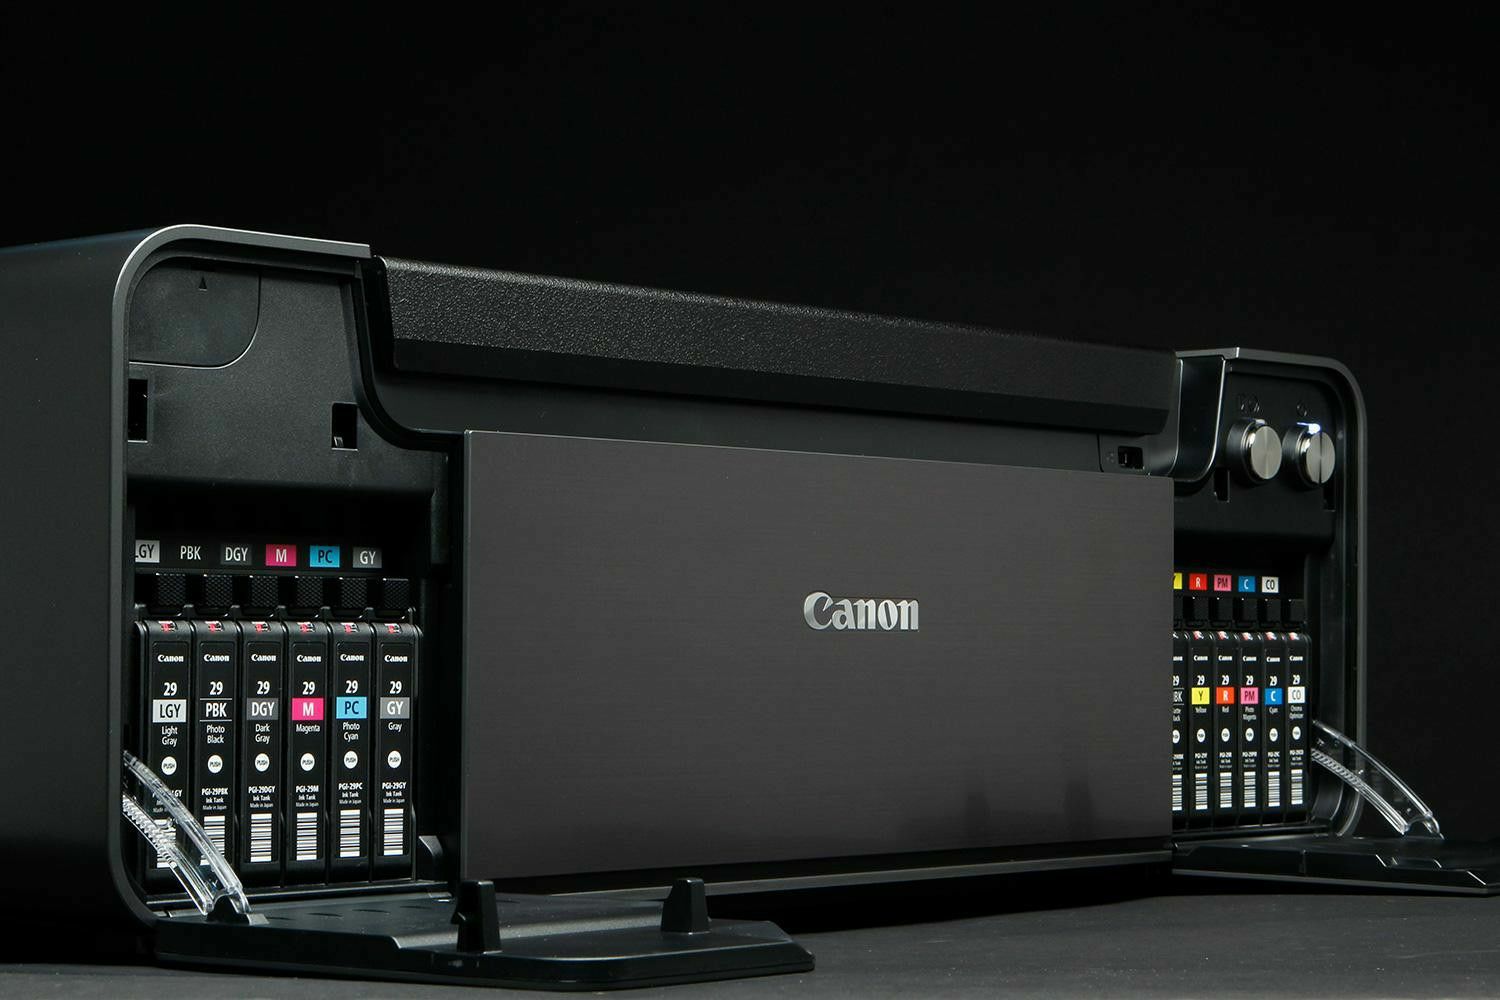 Canon Pixma PRO 1 Network Professional Inkjet Photo Printer PRO-1